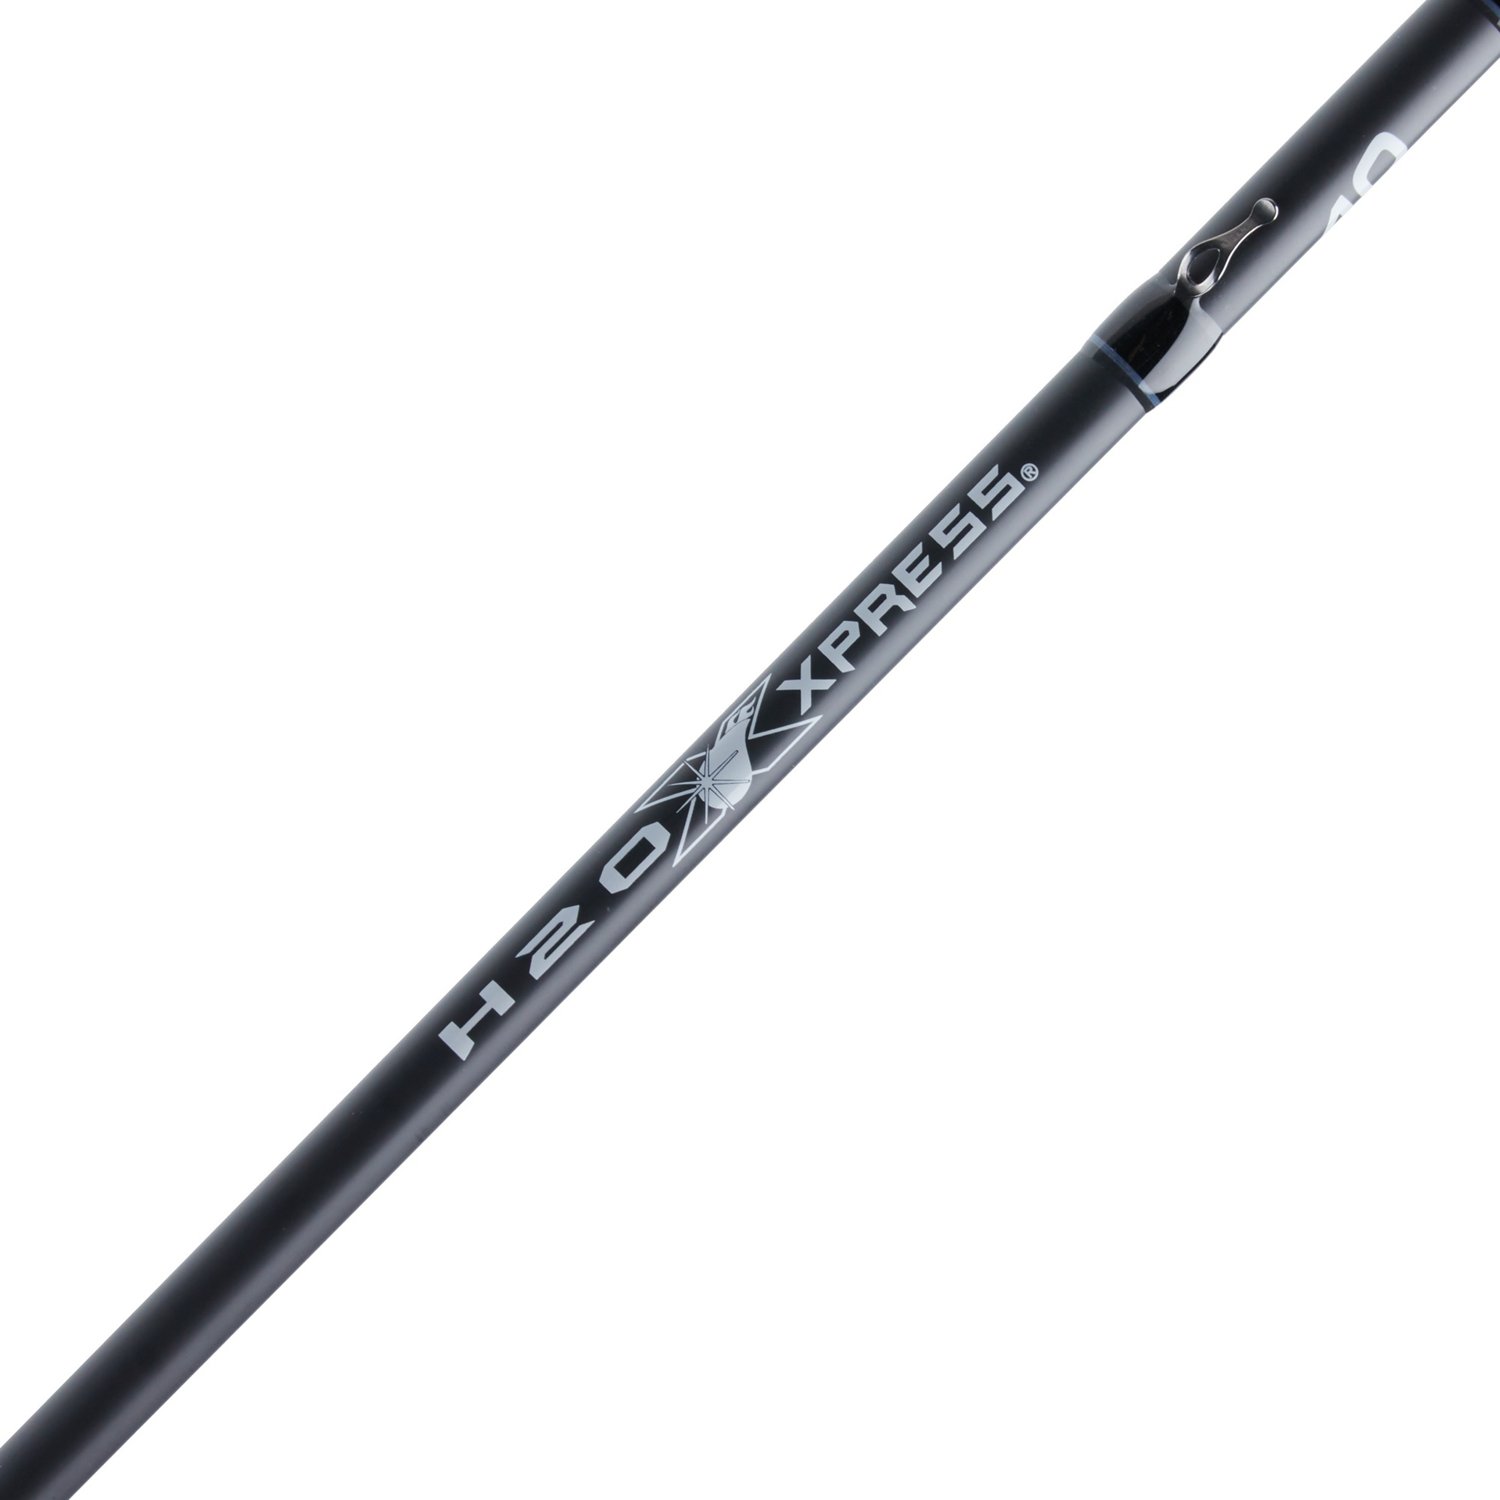 H2O Xpress New Tac 40 Casting Rod